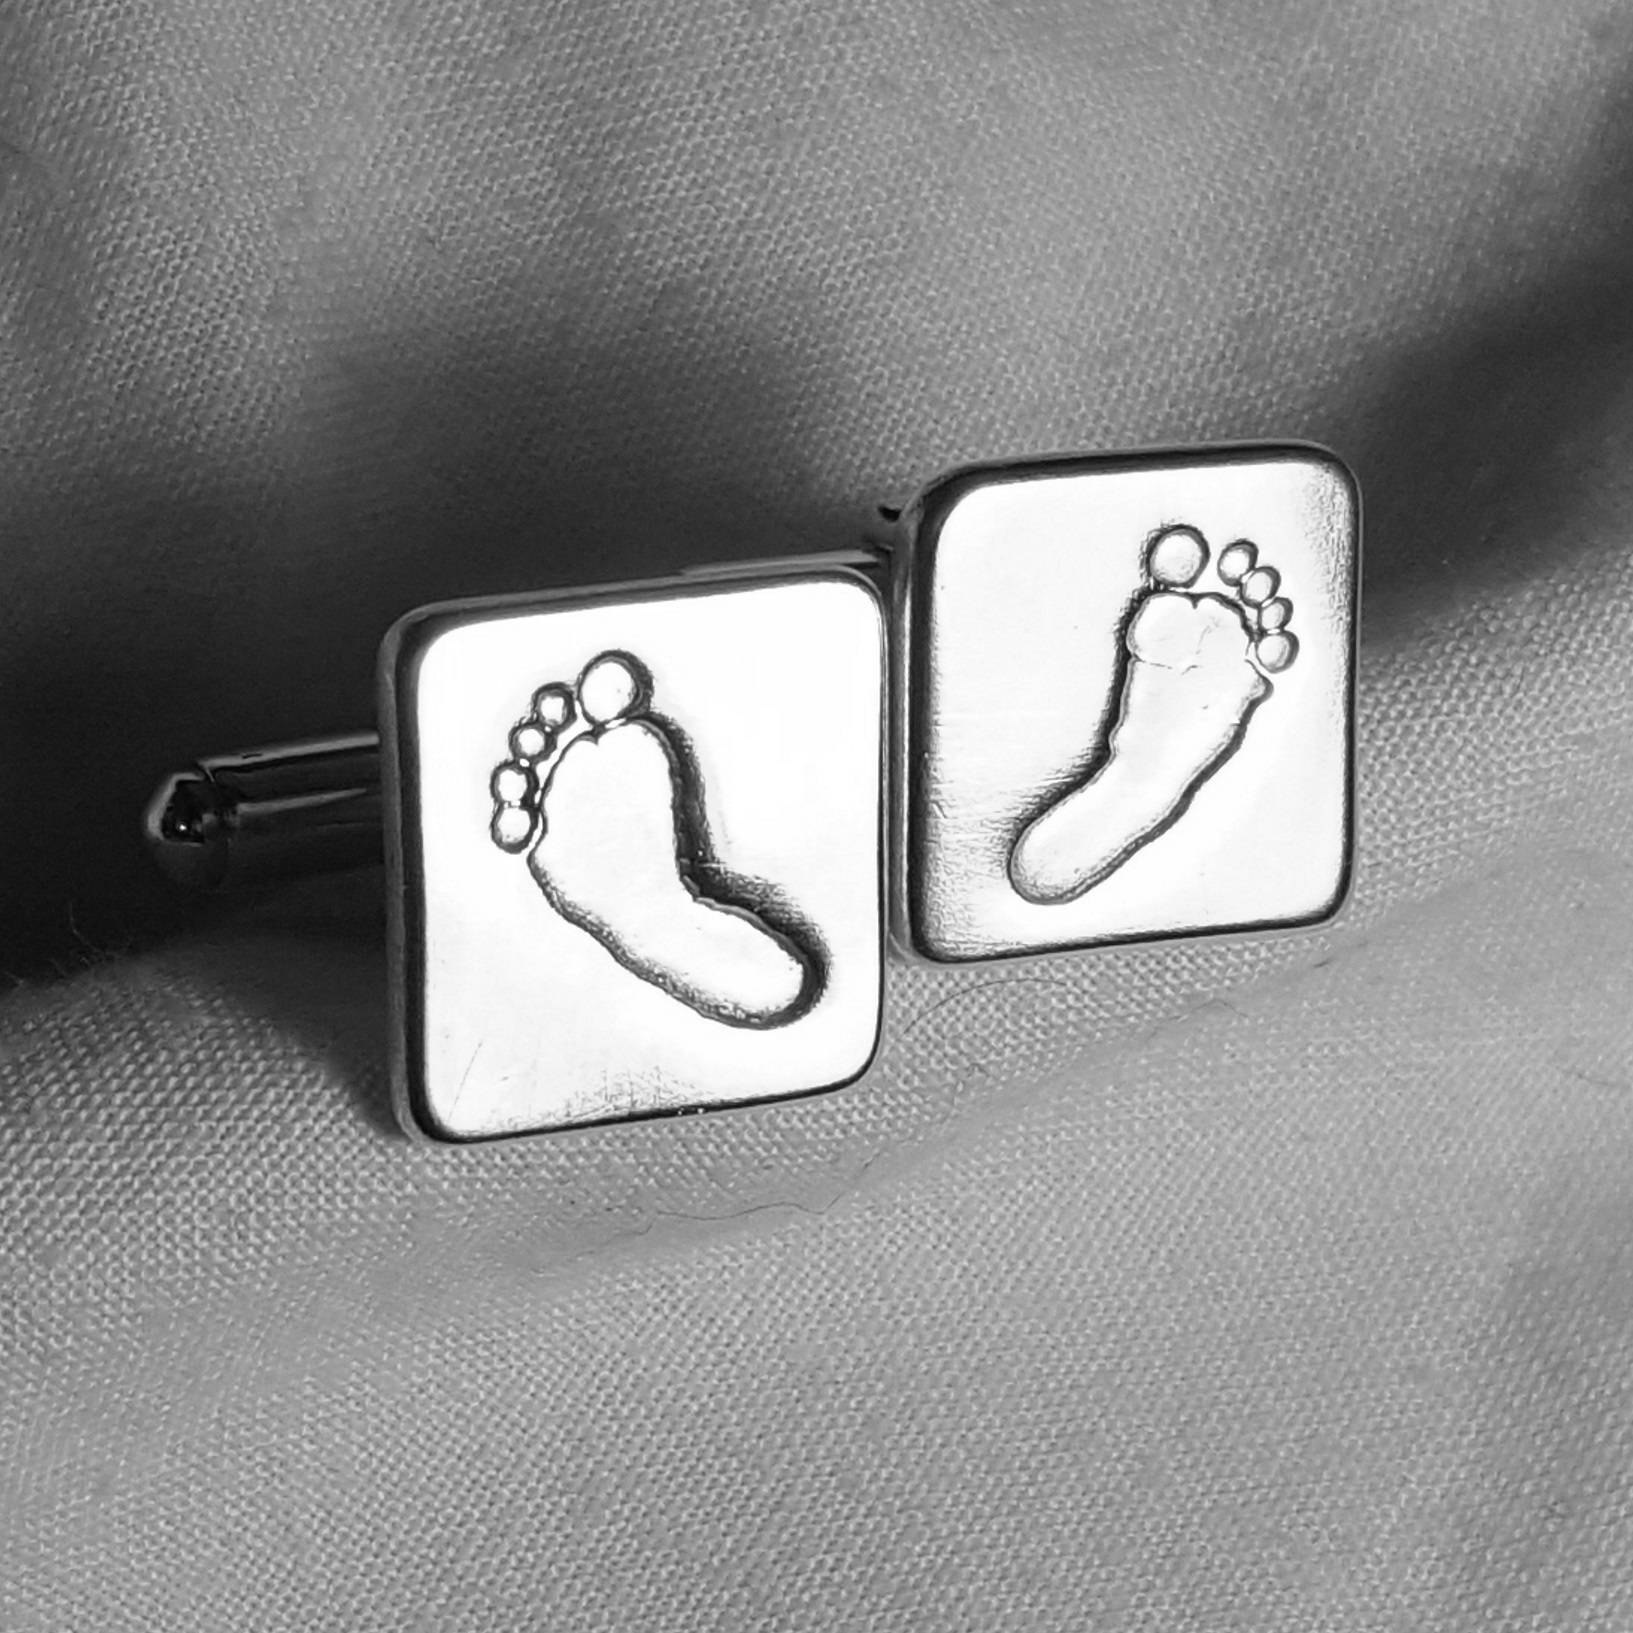 Footprint Cufflinks - Footprint Cuff Links Present For Dad Gift Husband Father’s Day